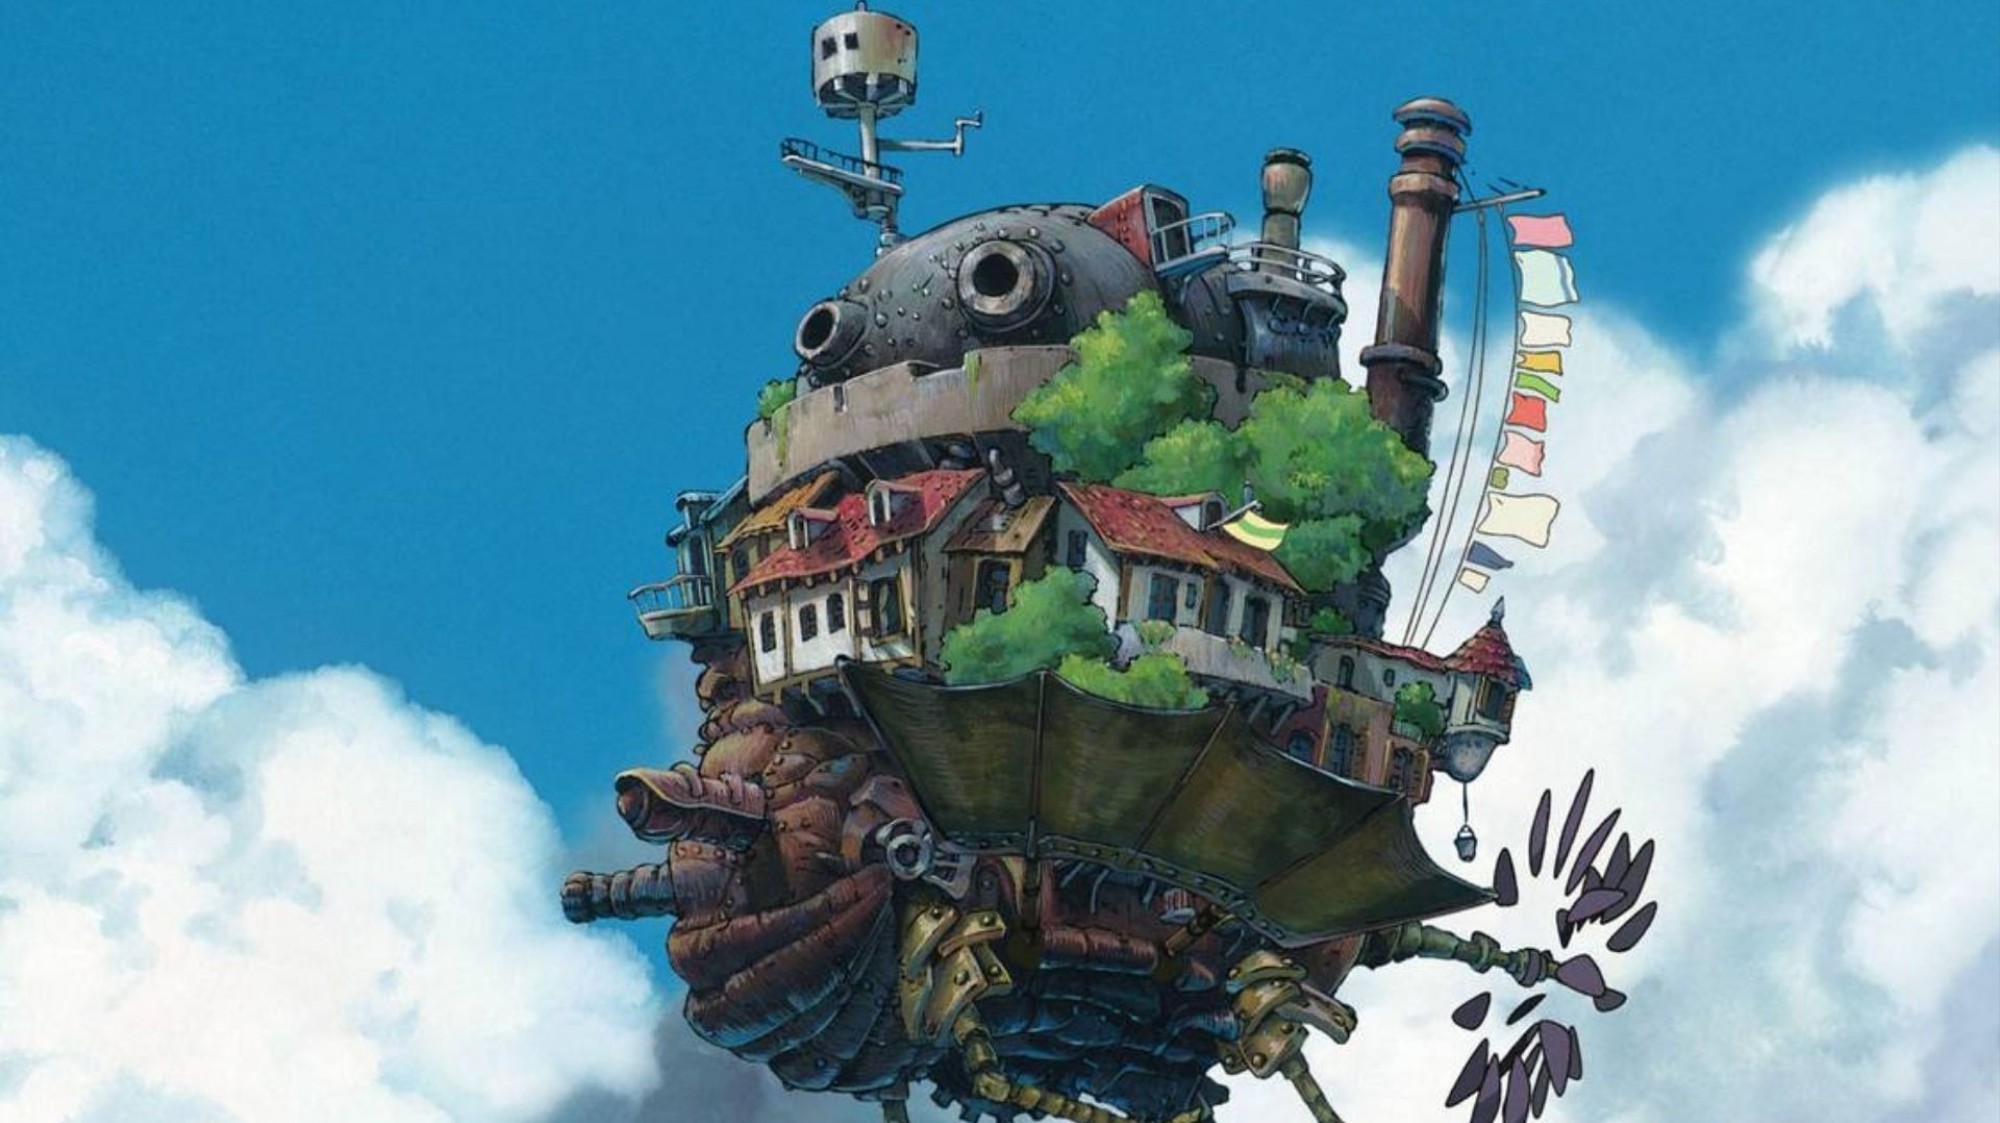 Studio Ghibli Shows a Glimpse of Its New Theme Park 